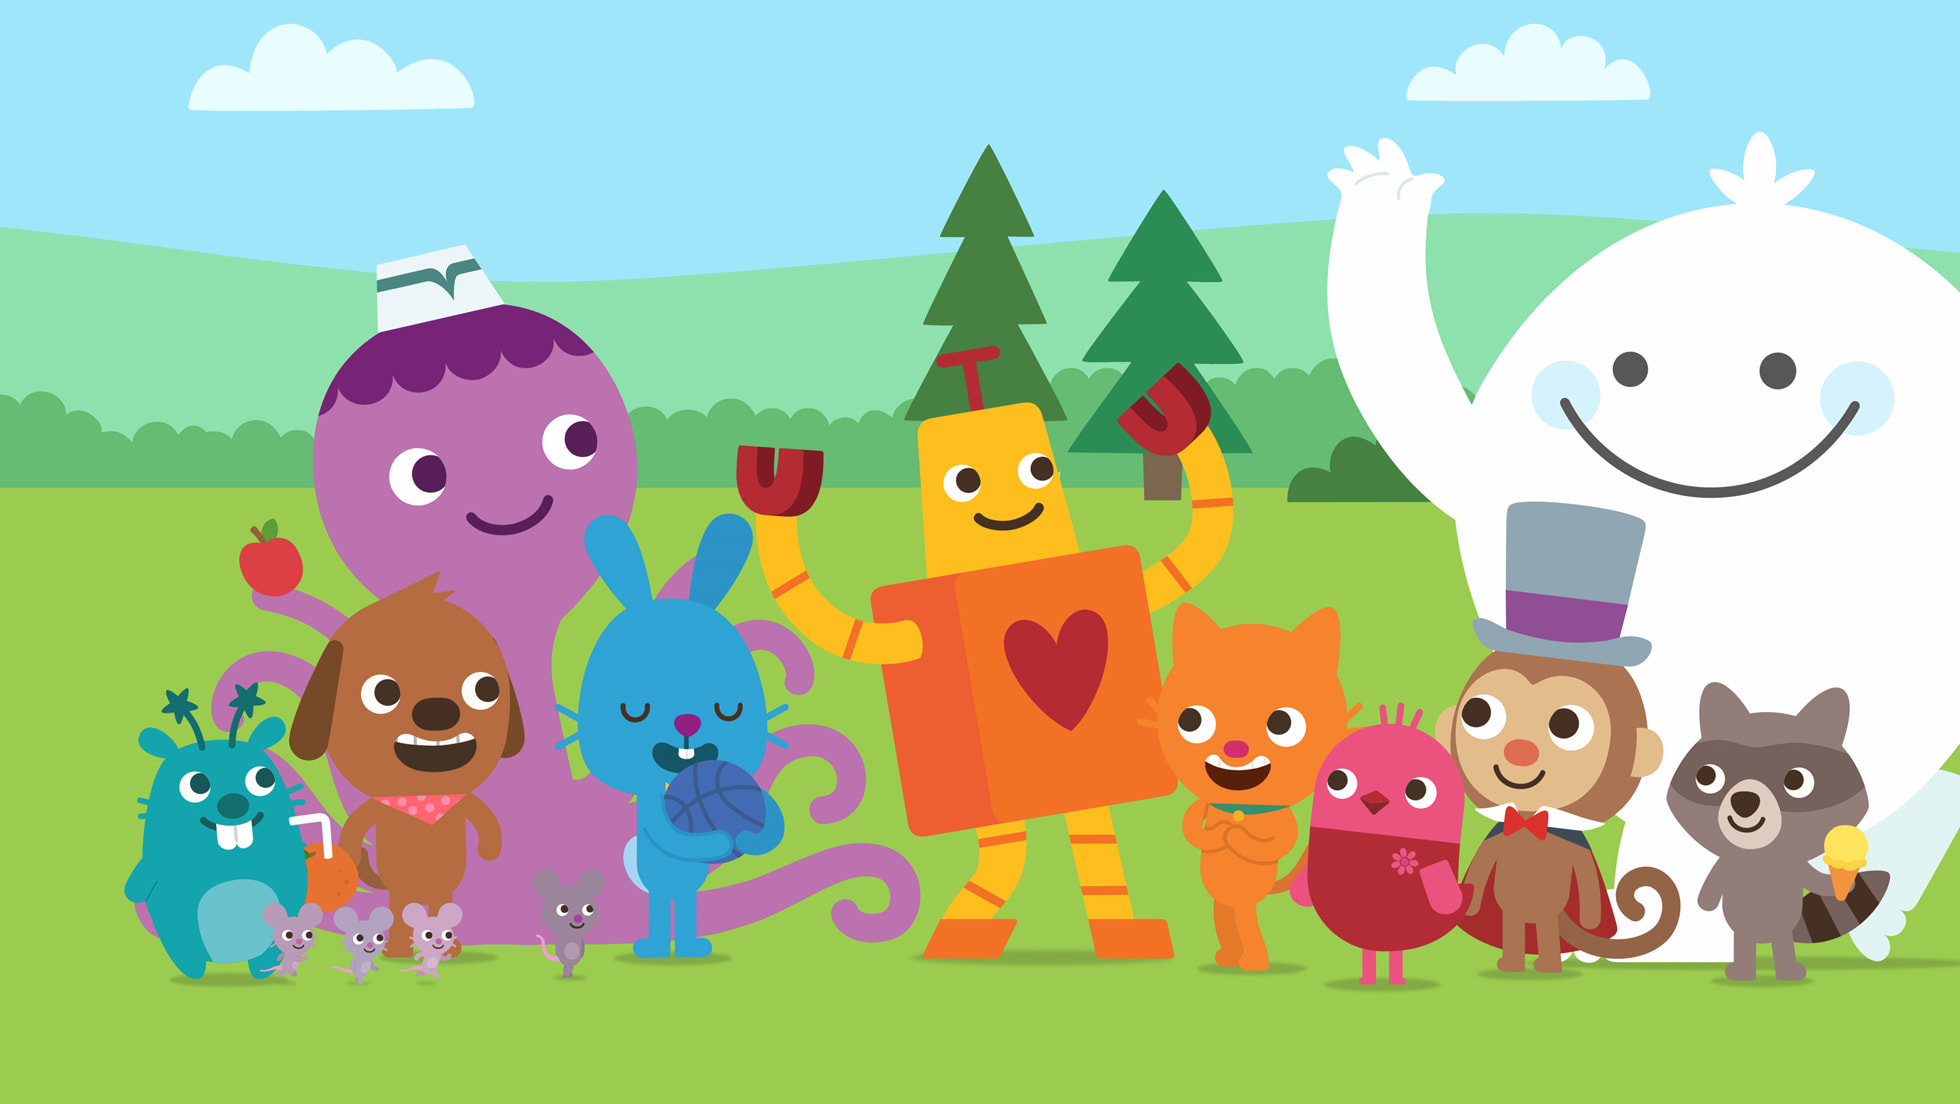 Apple TV+ reveals trailer for “Sago Mini Friends,” an adorable new  preschool animated series based on the award-winning app Sago Mini World -  Apple TV+ Press